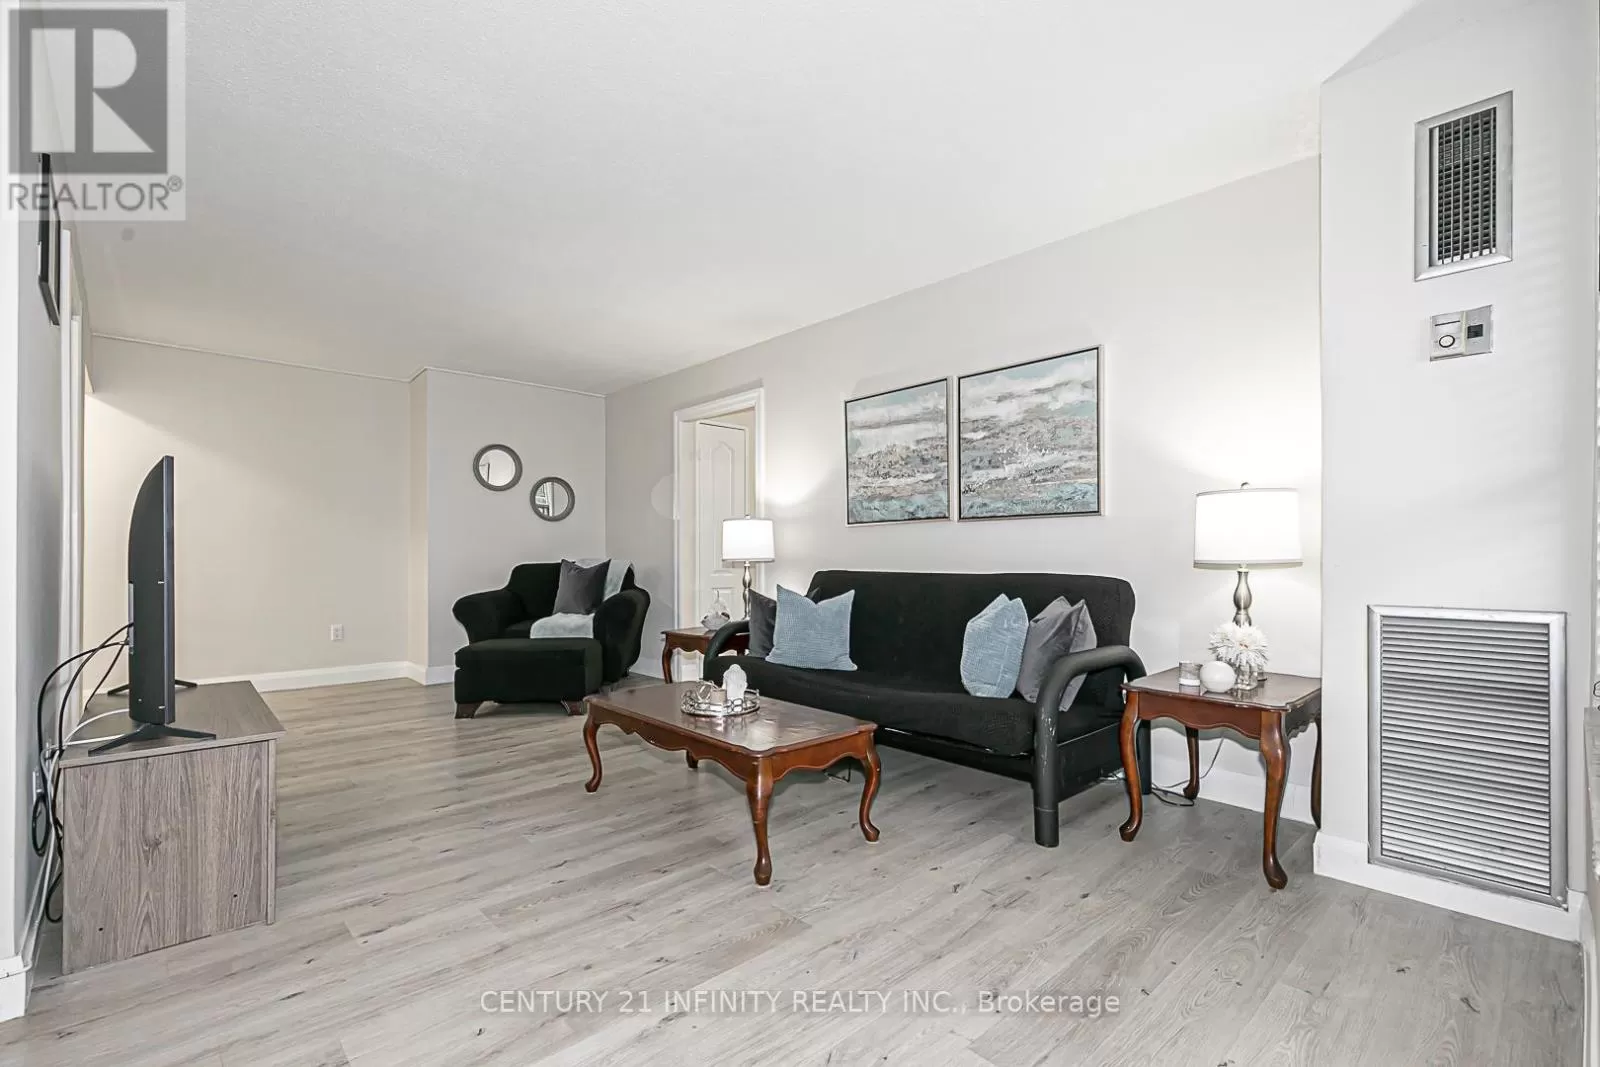 Apartment for rent: 314 - 10 Edgecliff Golfway, Toronto, Ontario M3C 3A3